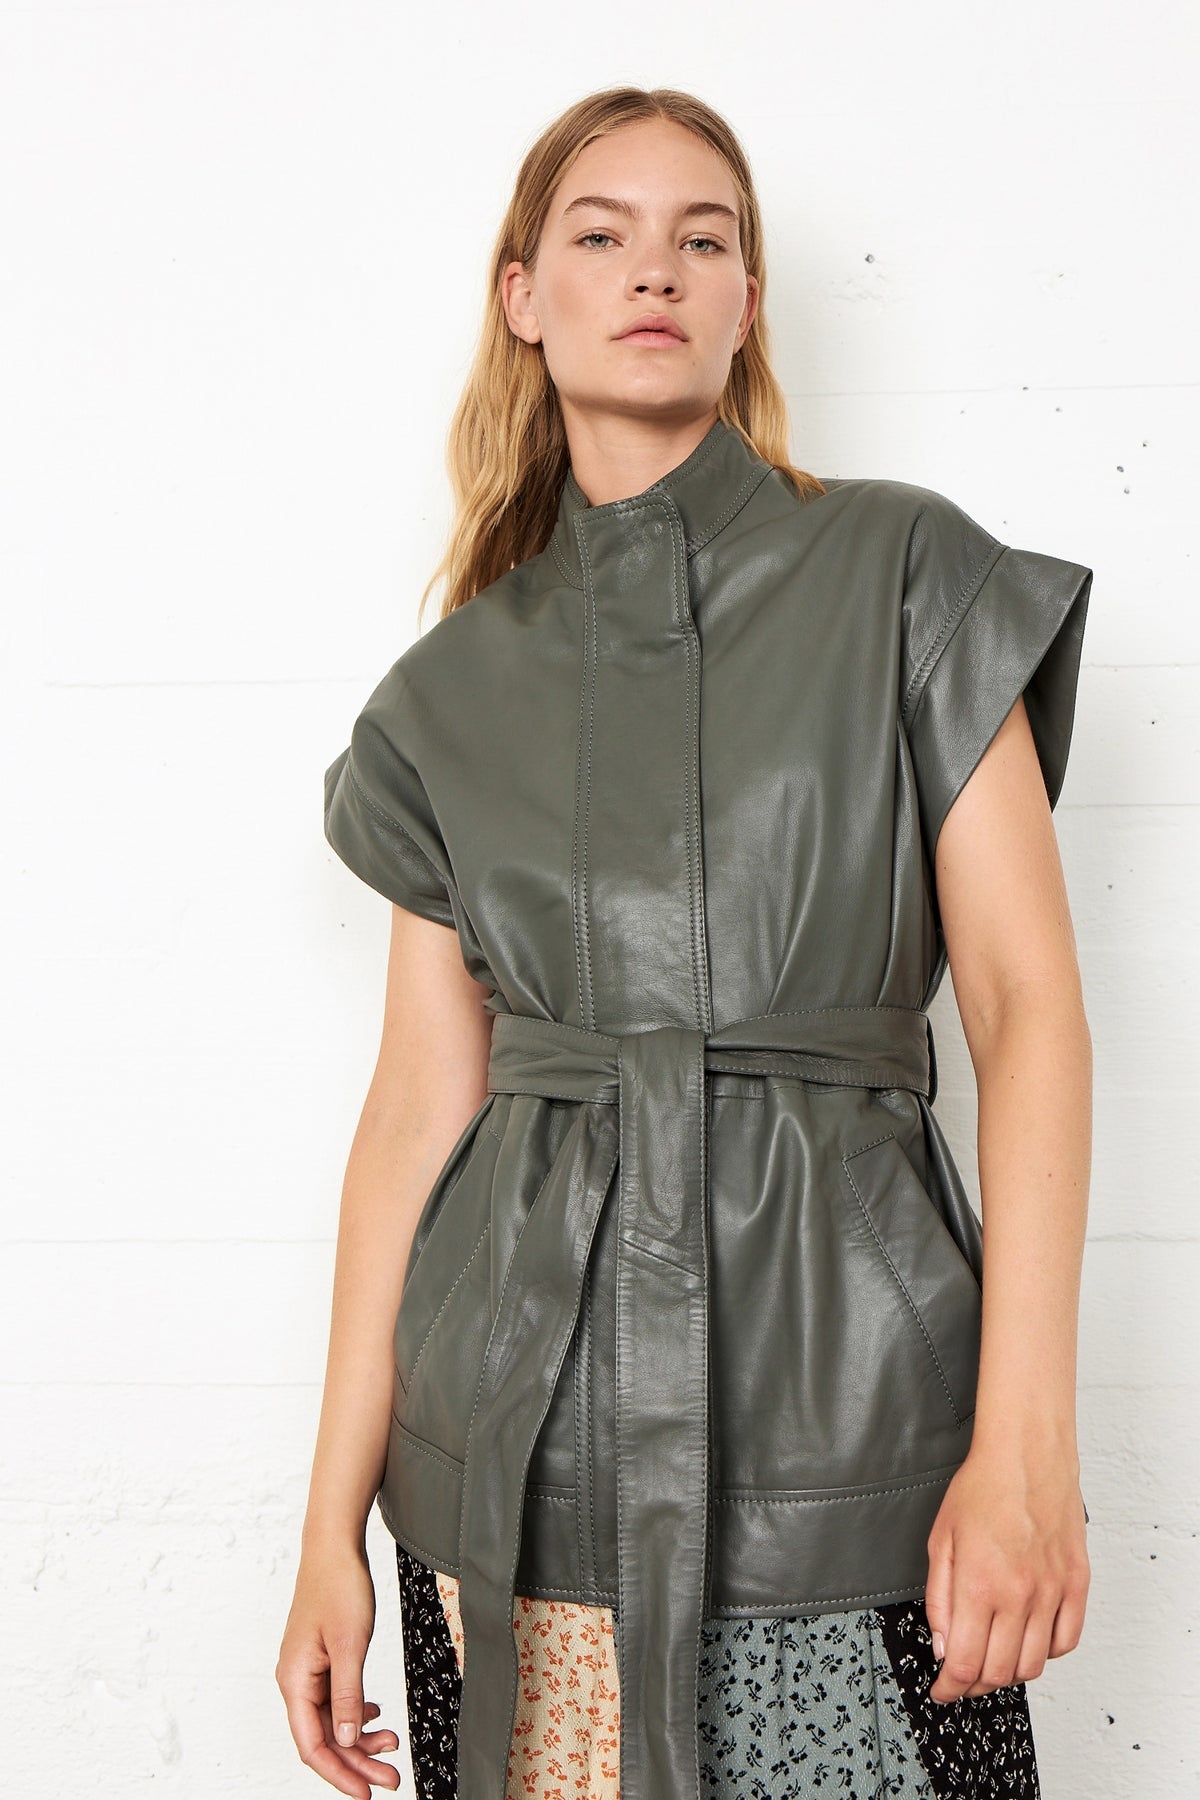 Indai Leather Waistcoat - Agave Green-2